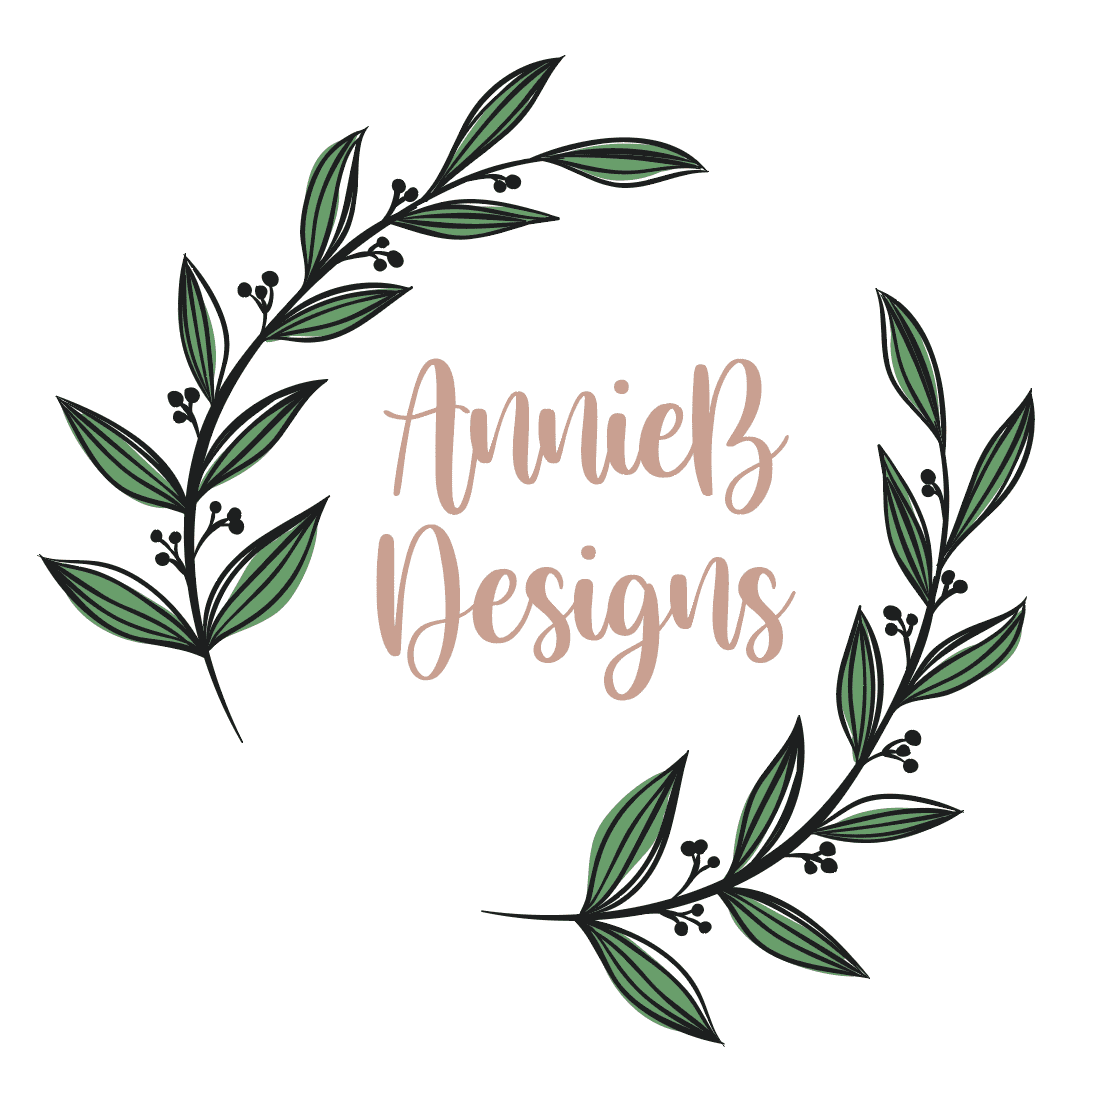 AnnieB Designs